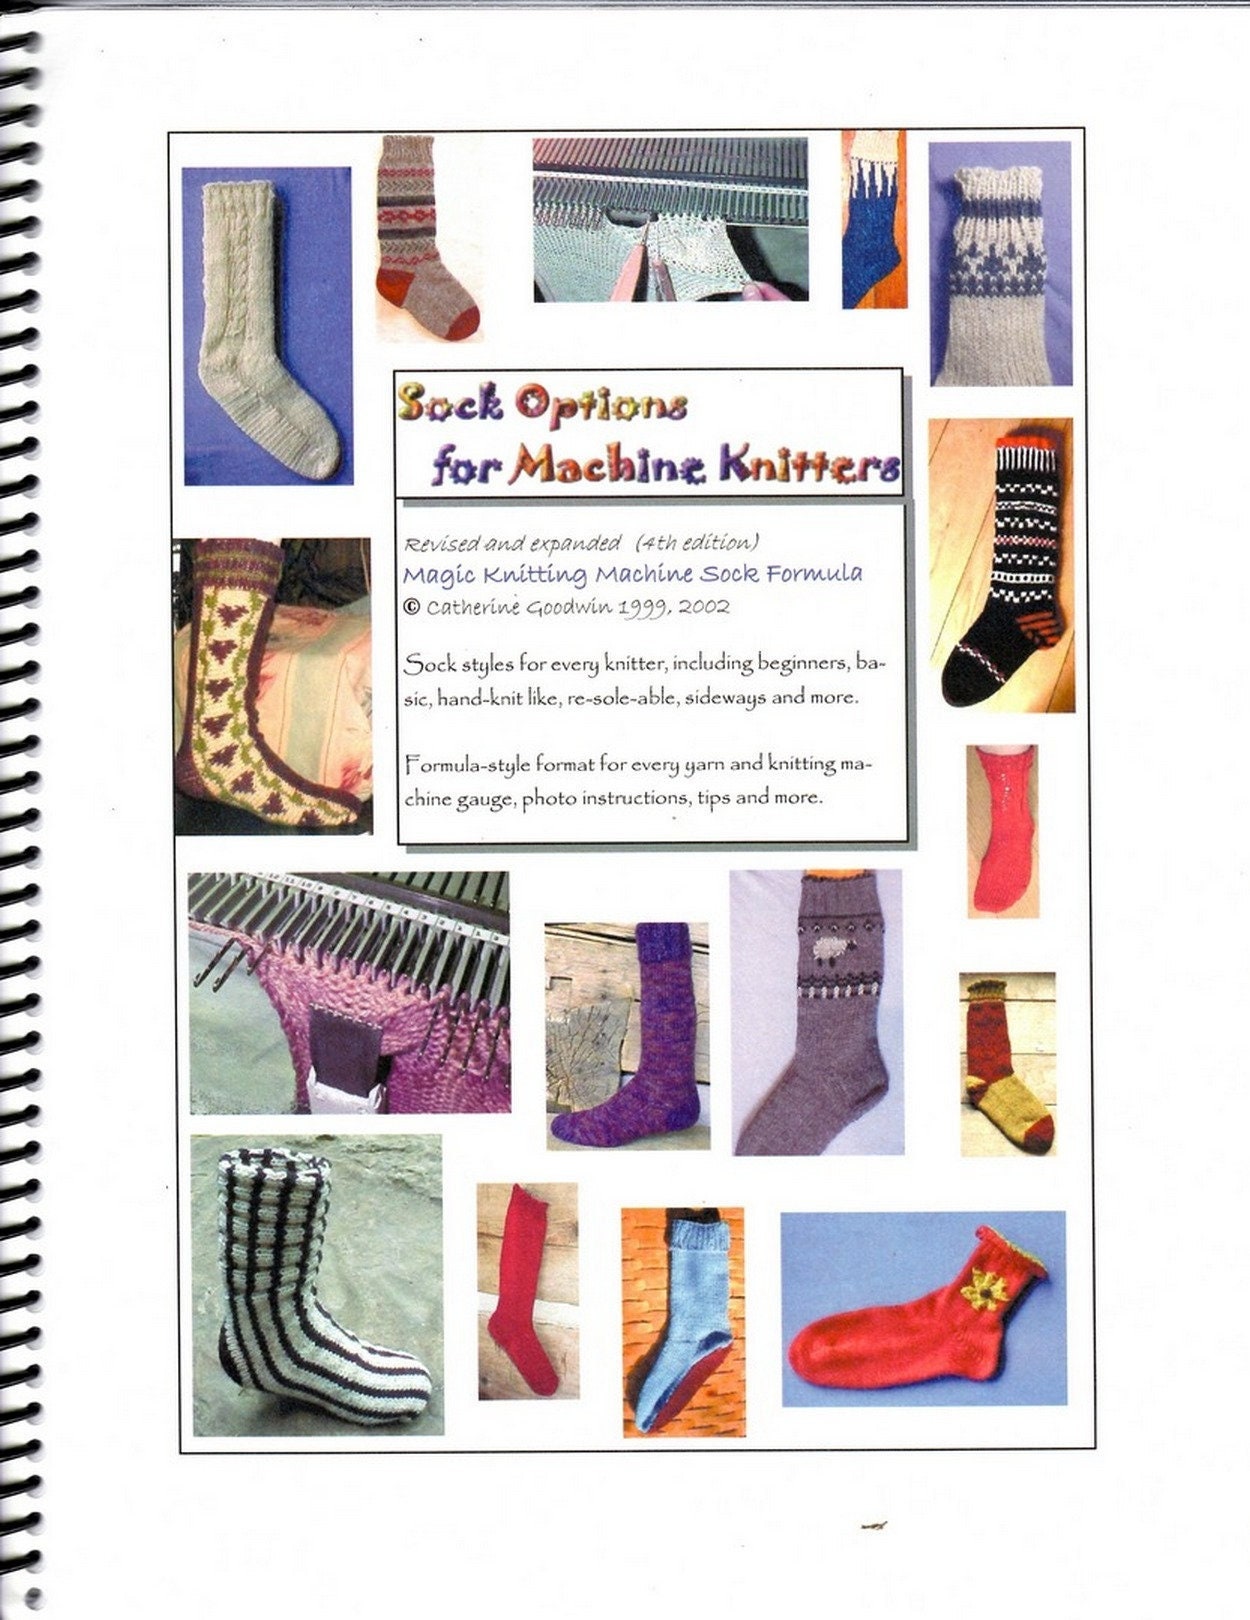 Sentro Knitting Machine XL 48 Needles FREE Adapter Free-book 